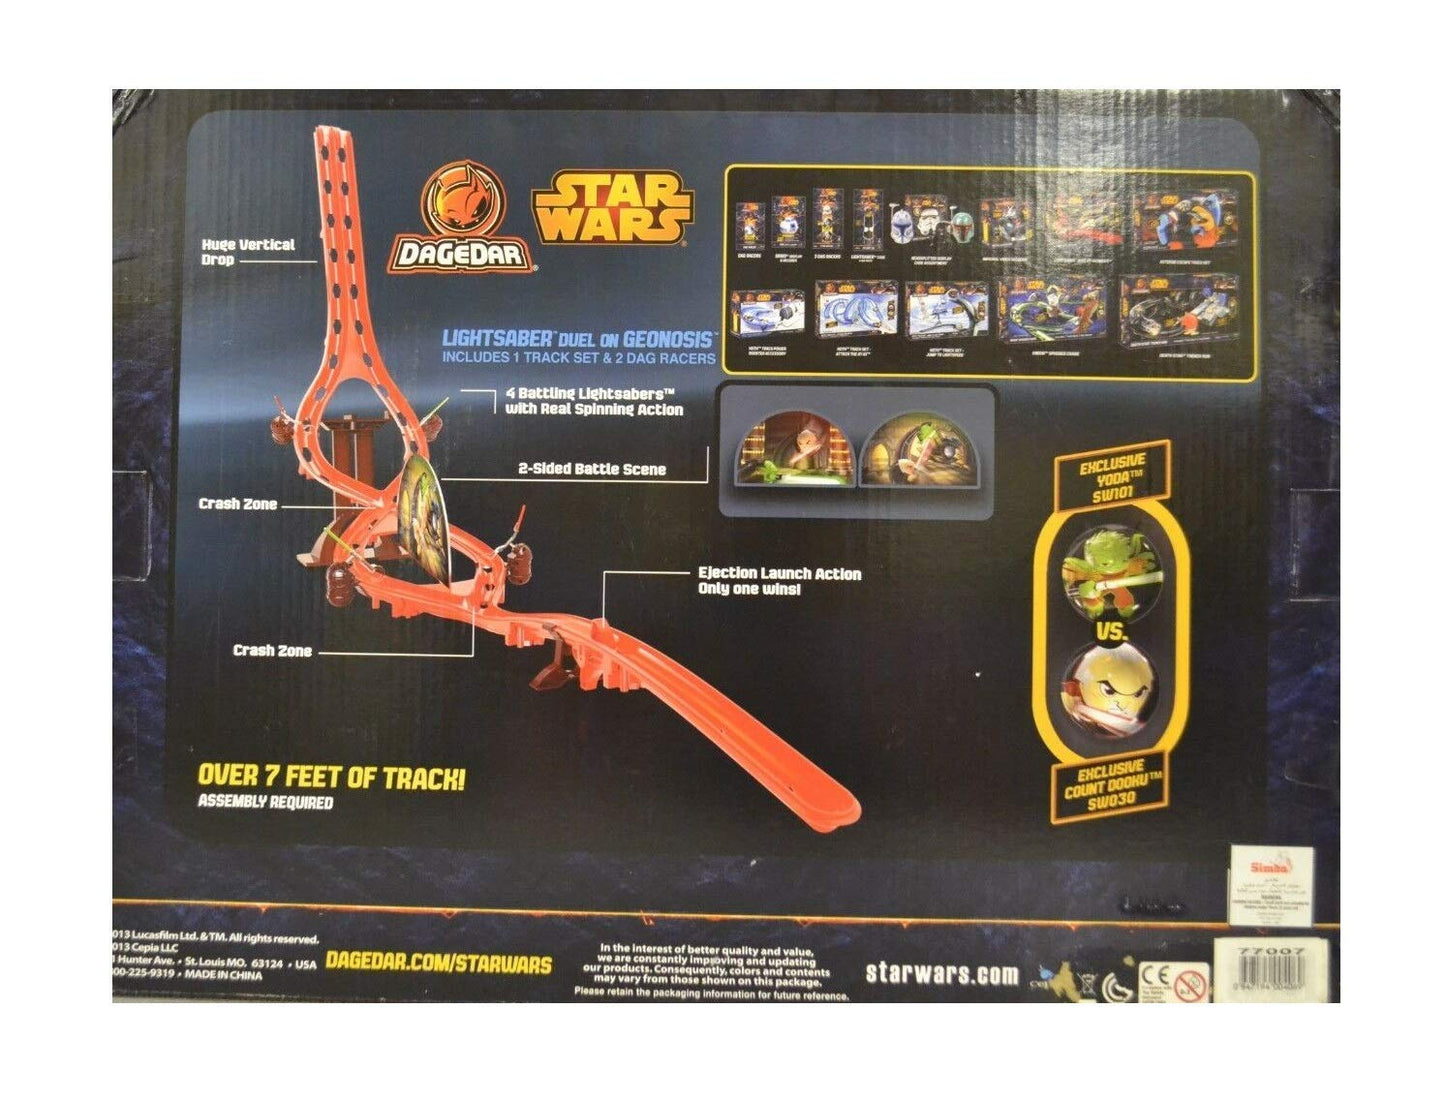 2013 Star Wars Dagedar Lightsaber Duel On Geonosis Race Track Set- Brand New Factory Sealed Shop Stock Room Find